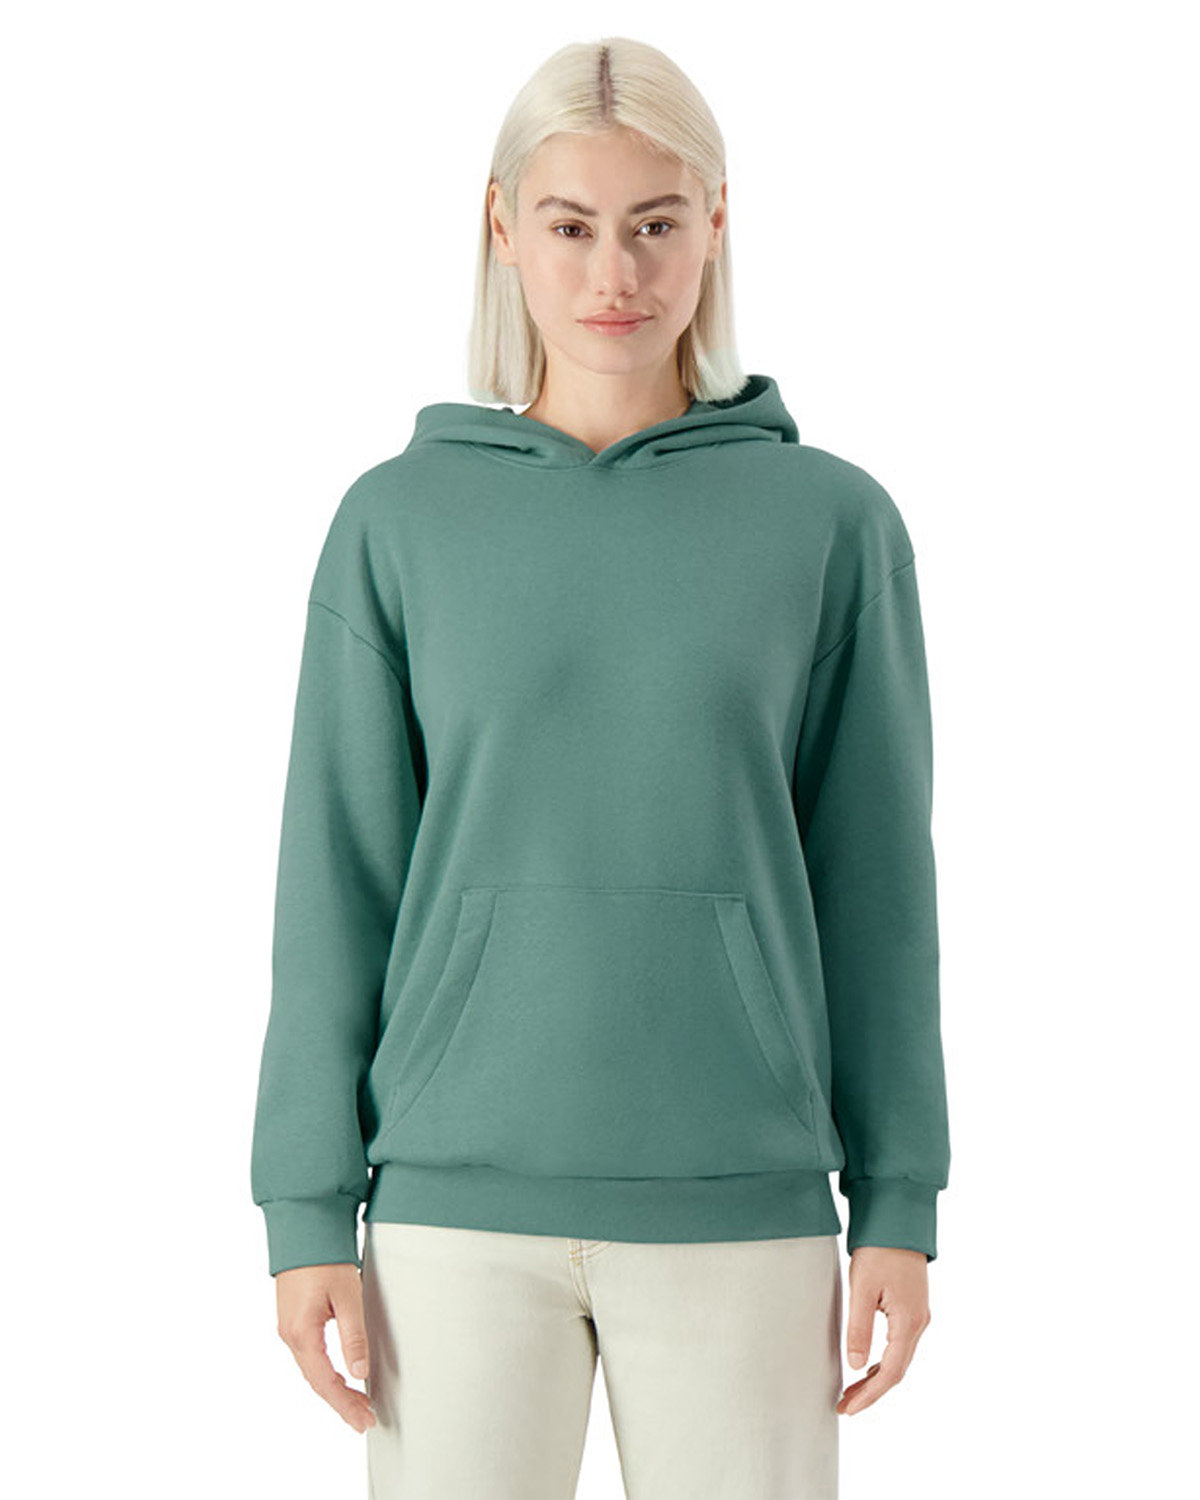 American Apparel Unisex ReFlex Fleece Pullover Hooded Sweatshirt ...